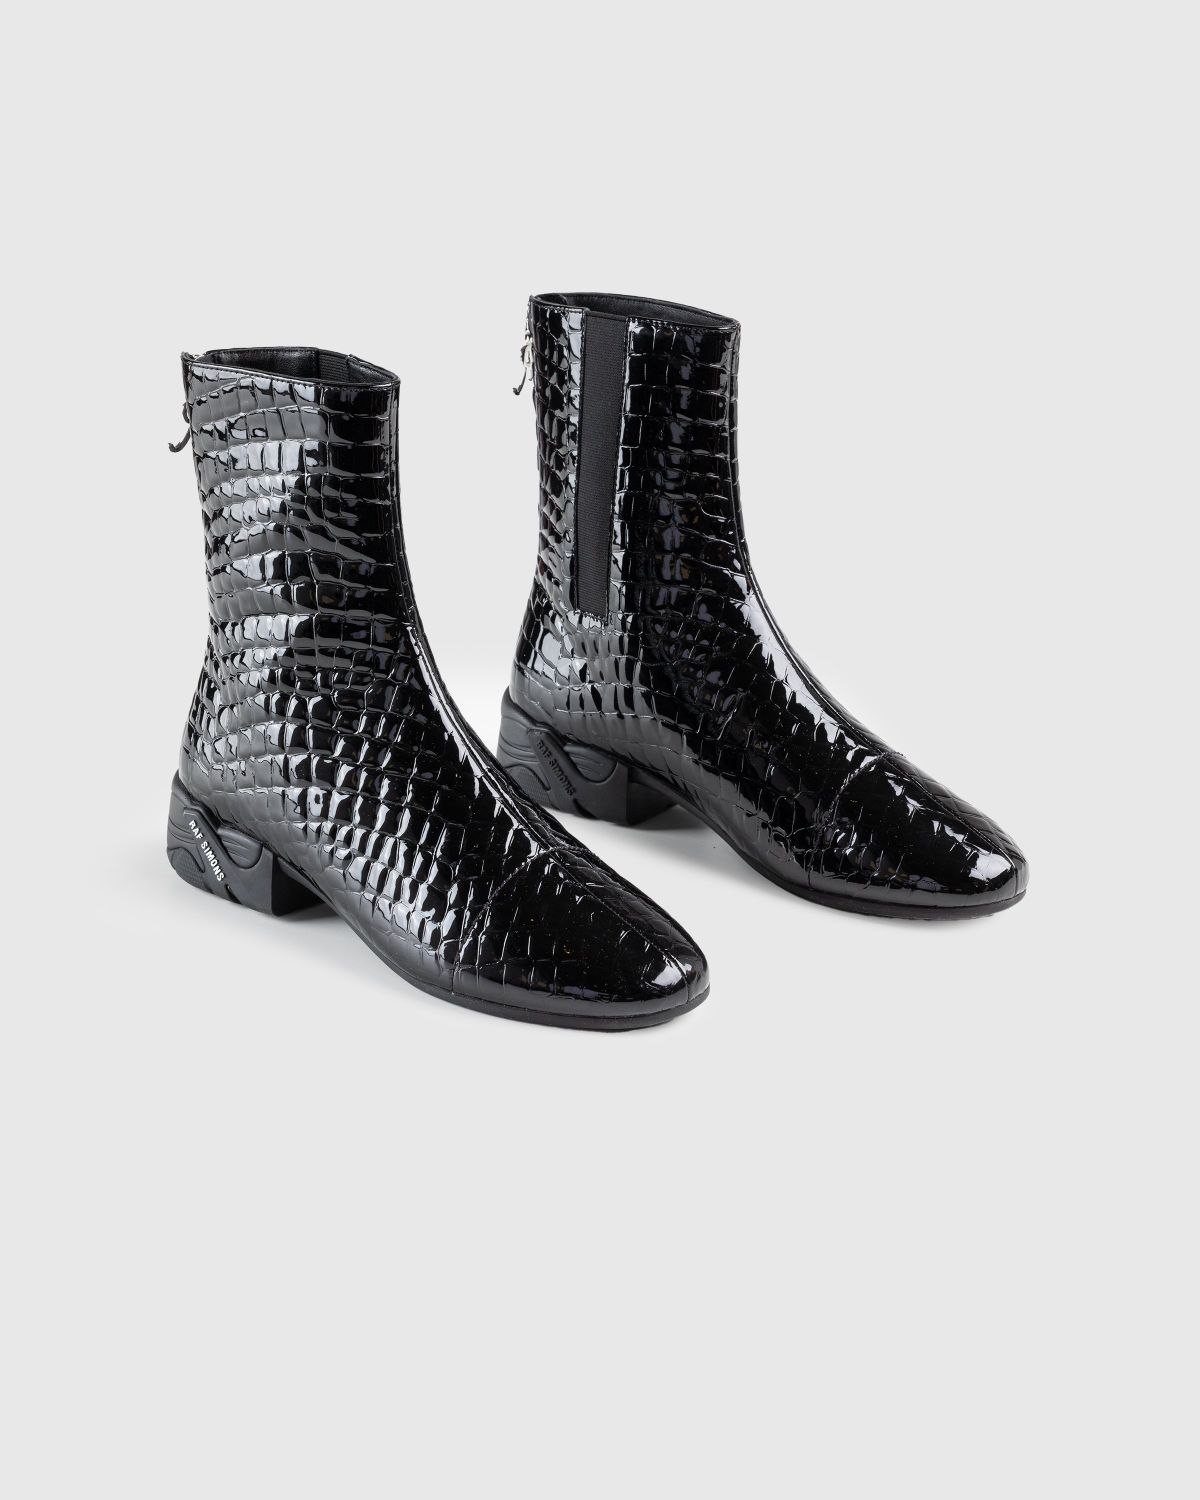 Raf Simons – Solaris High Leather Boot Black Croc - Boots - Black - Image 3